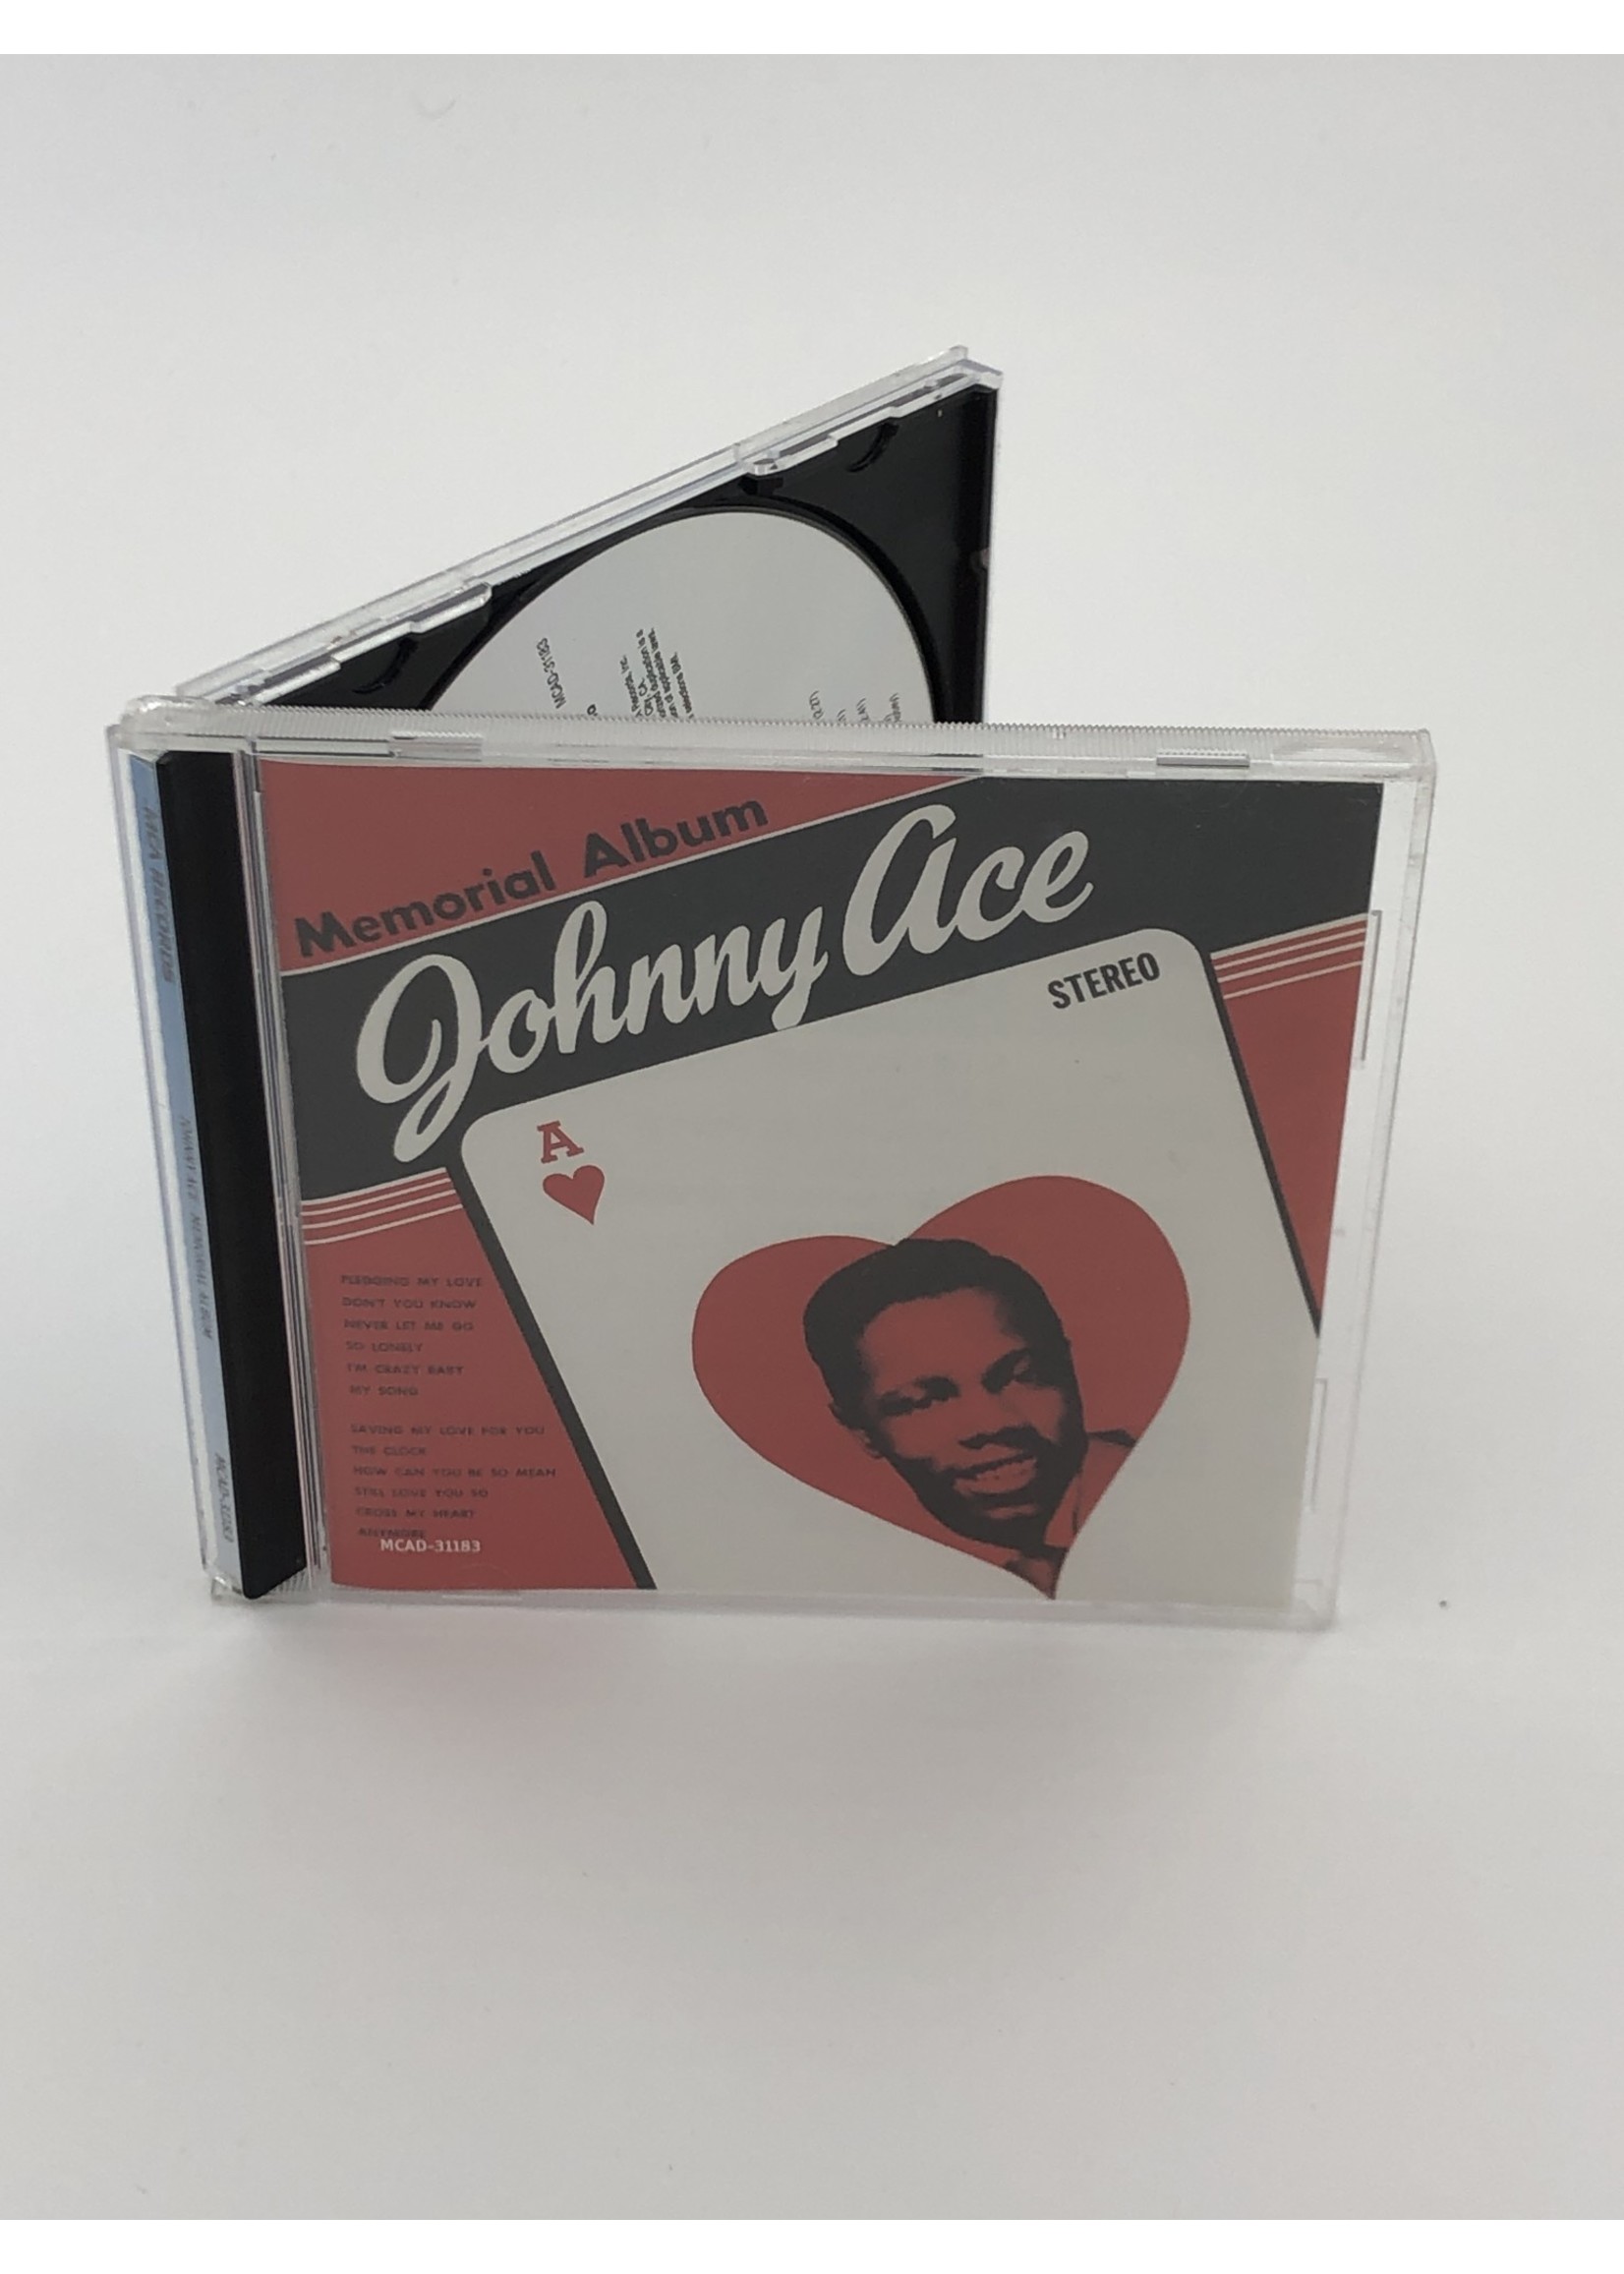 CD Johnny Ace: Memorial Album CD